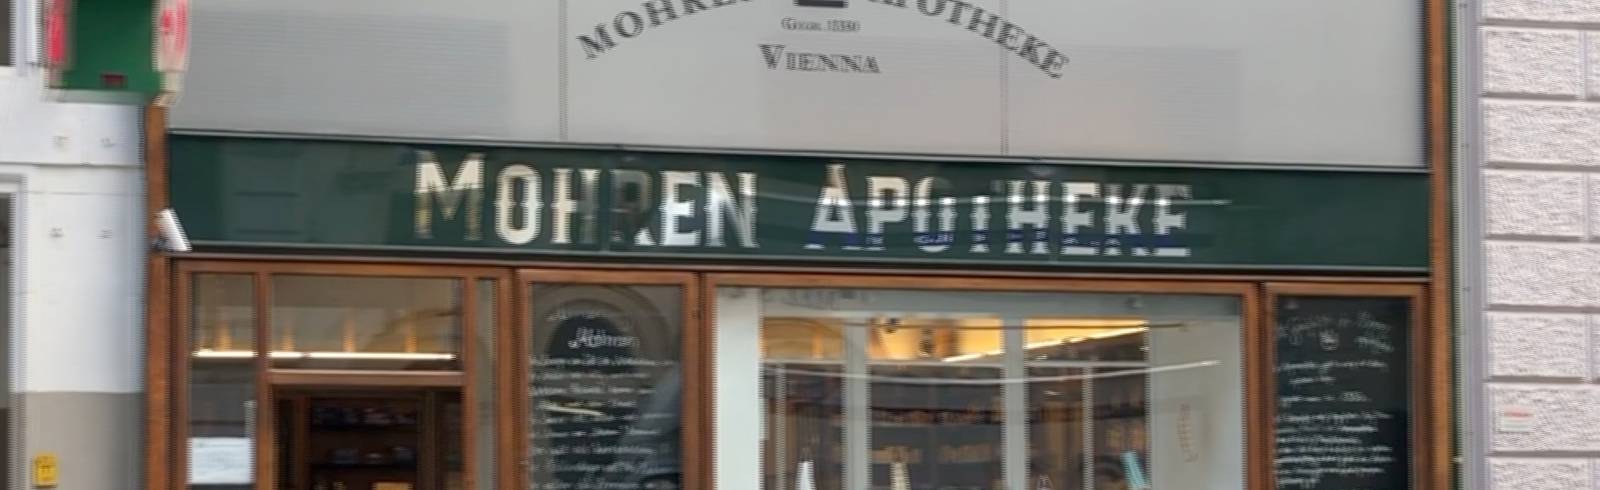 Bezirksflash: Mohren-Apotheke ändert Namen nach Protesten